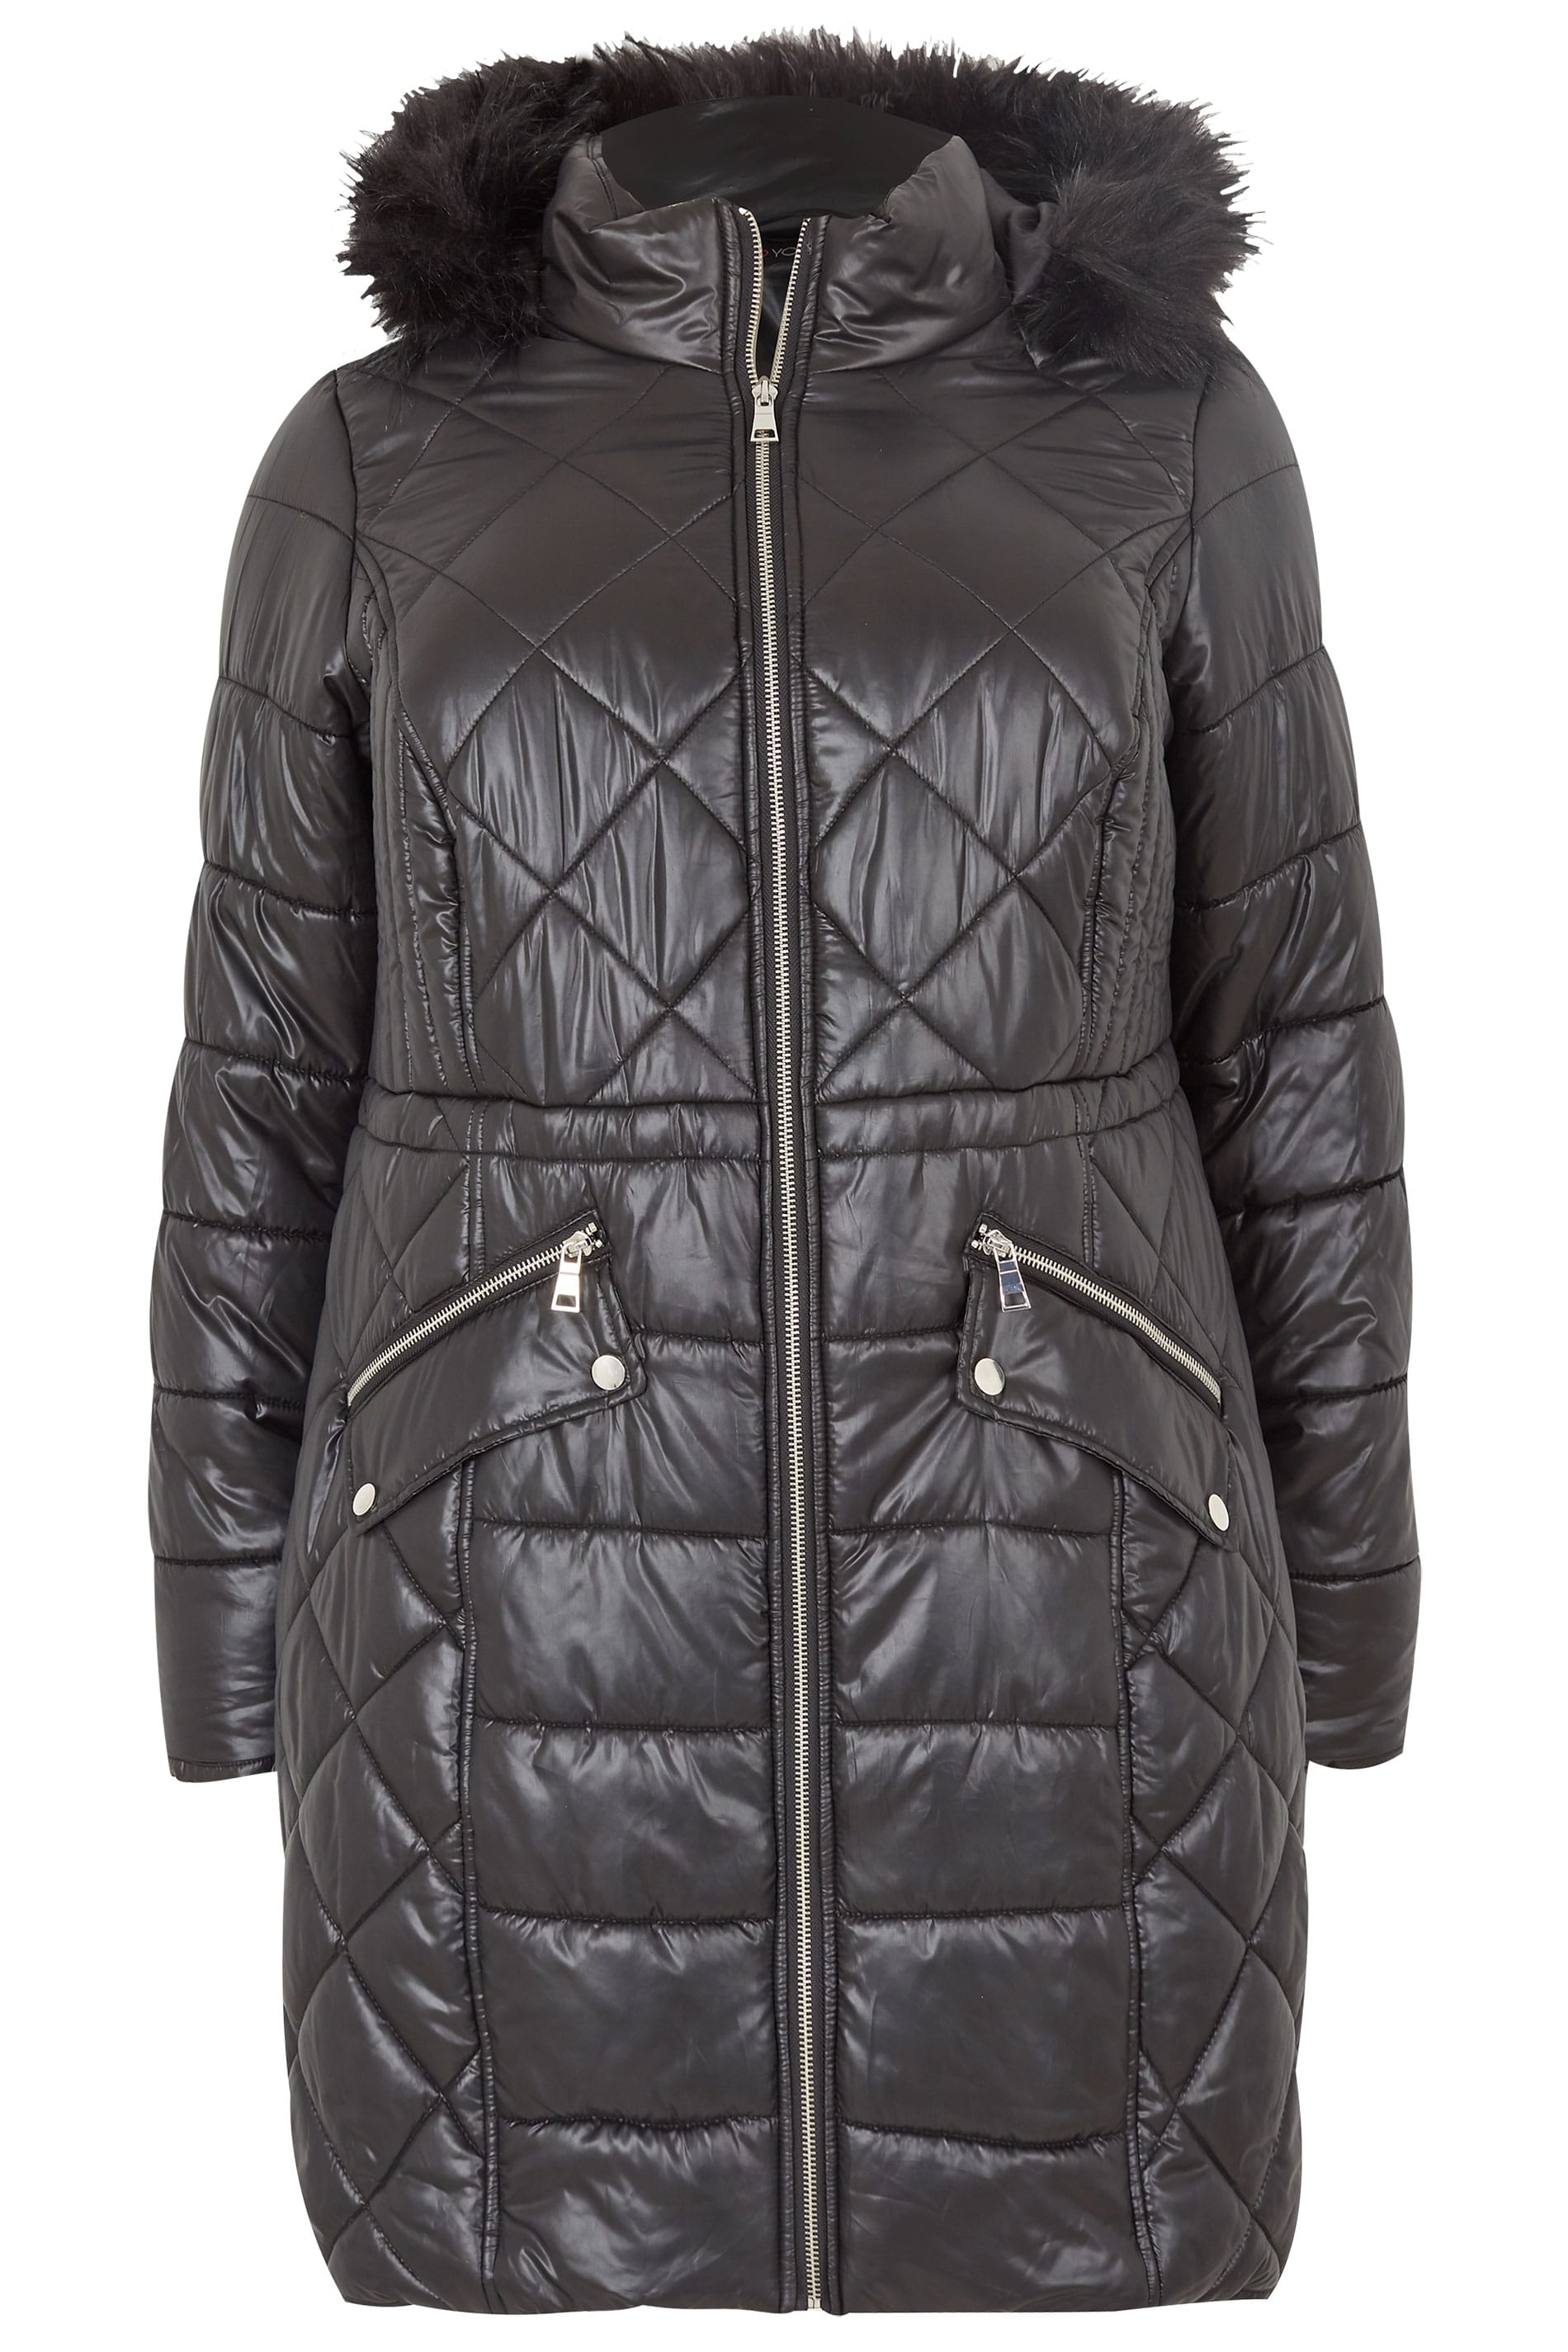 Black Longline Wet Look Puffer Coat, Plus size 16 to 36